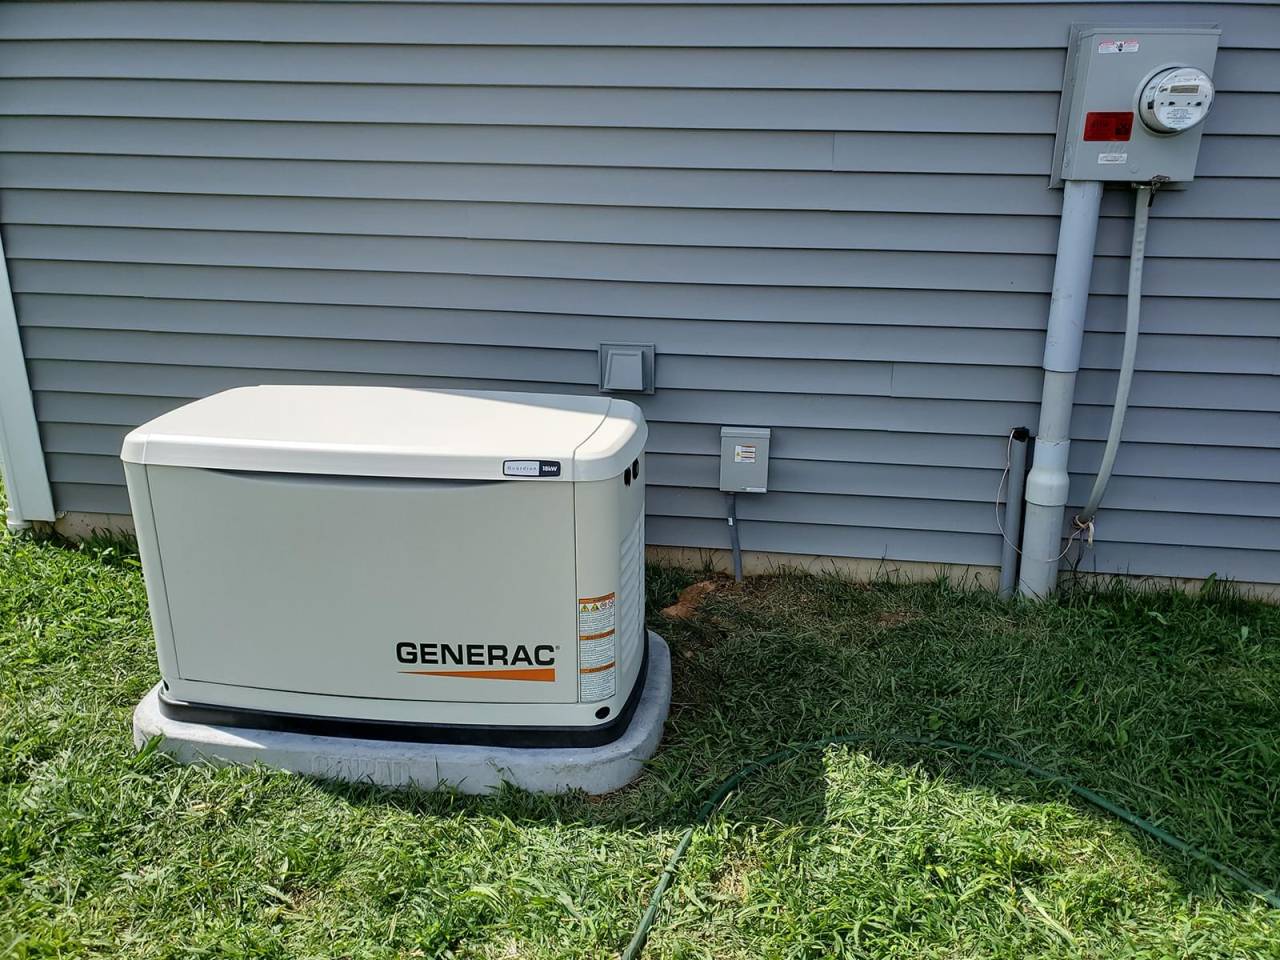 a newly installed generac generator